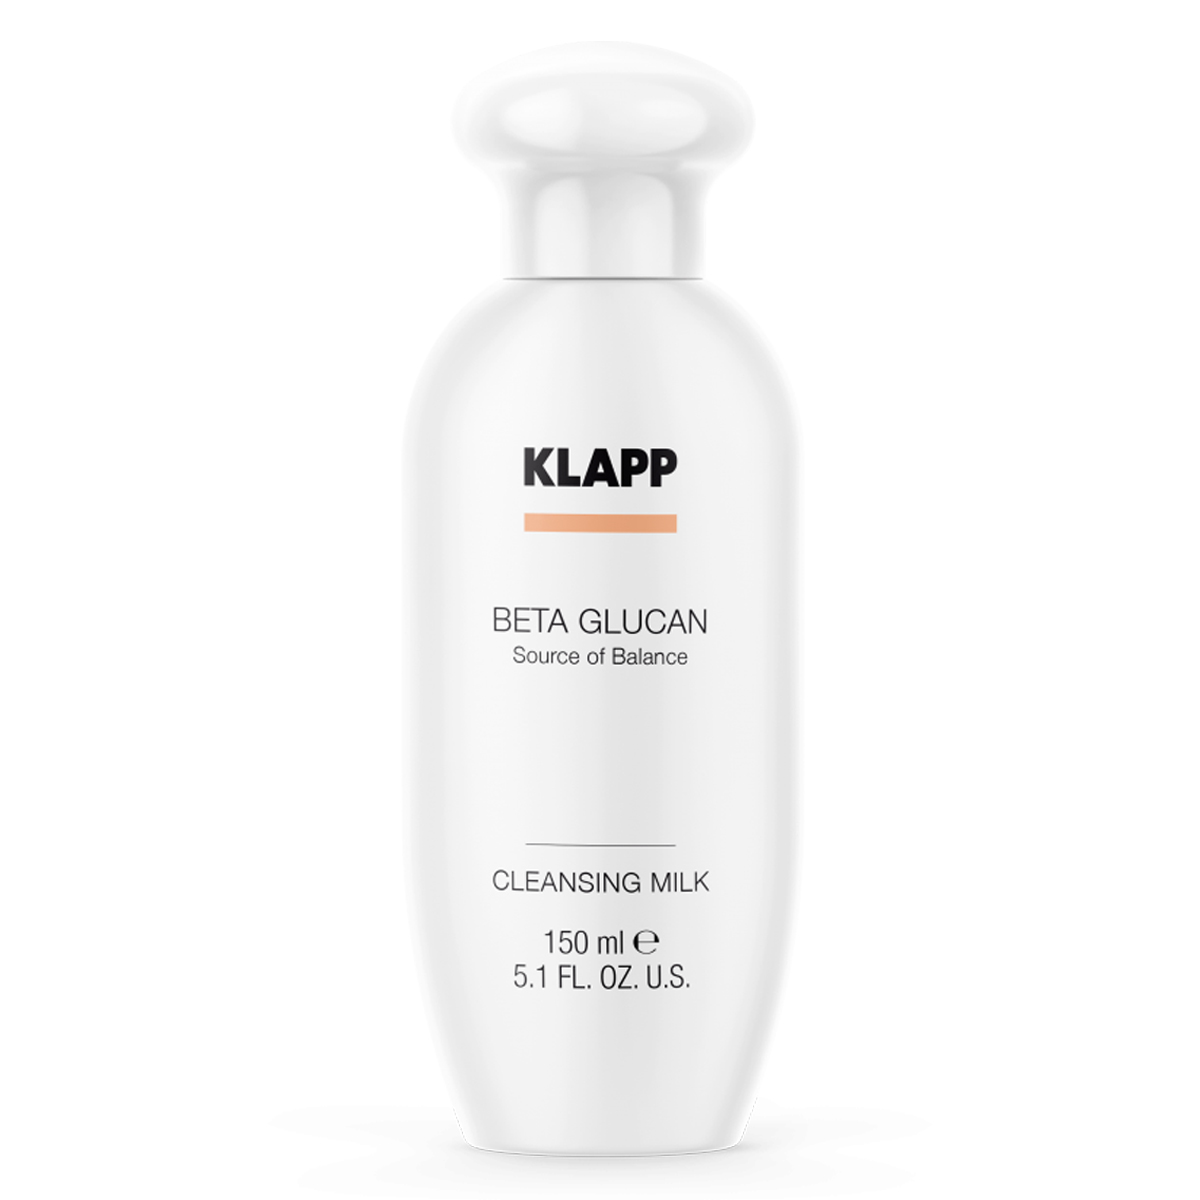 KLAPP Beta Glucan Cleansing Milk 150 ml Cleanser